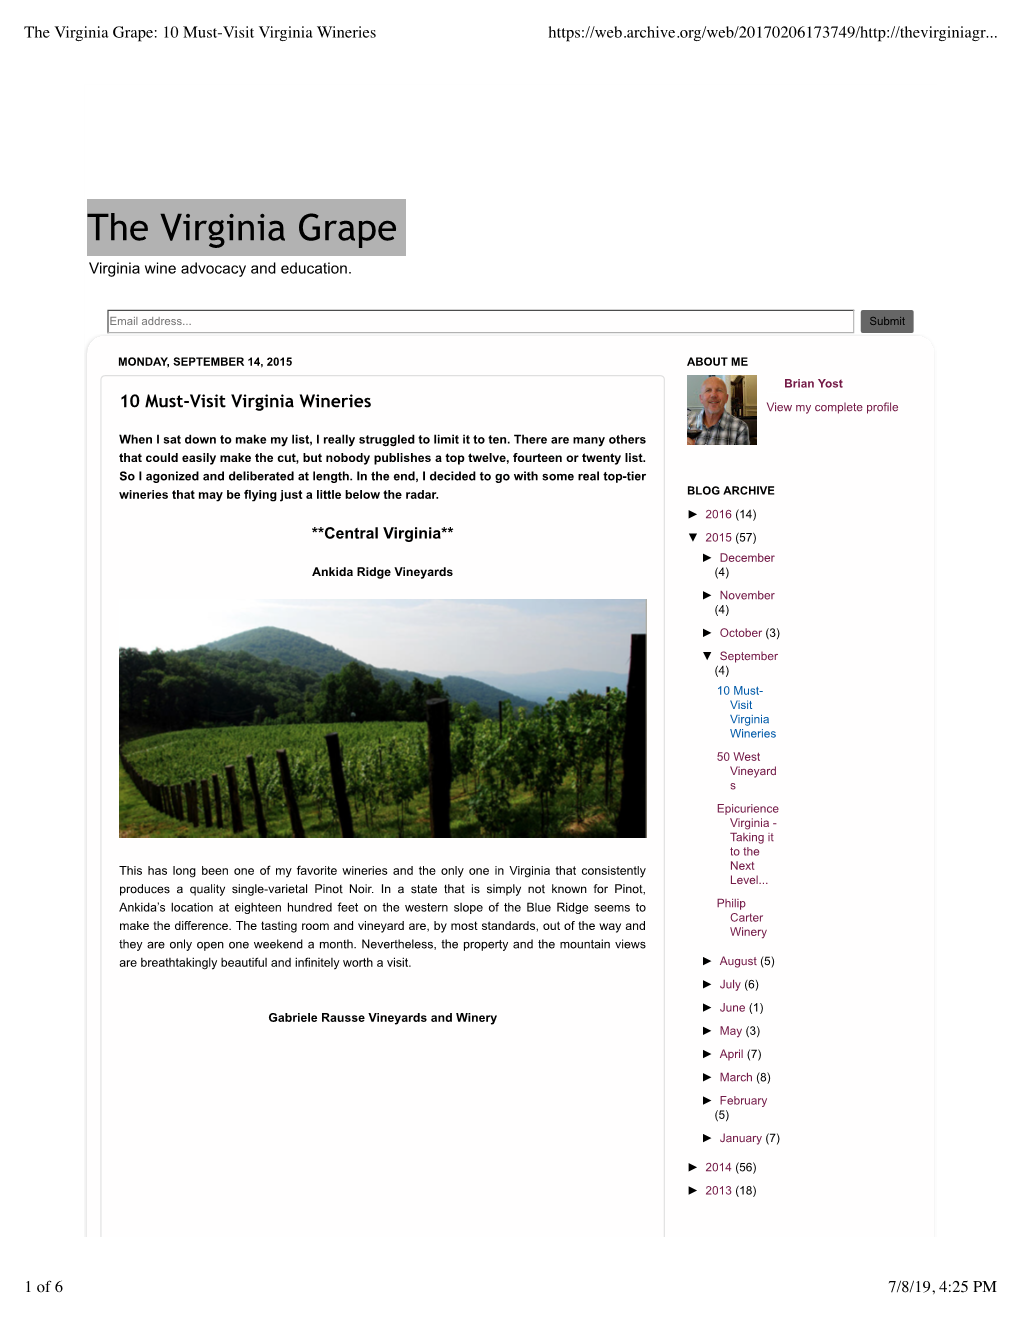 The Virginia Grape: 10 Must-Visit Virginia Wineries